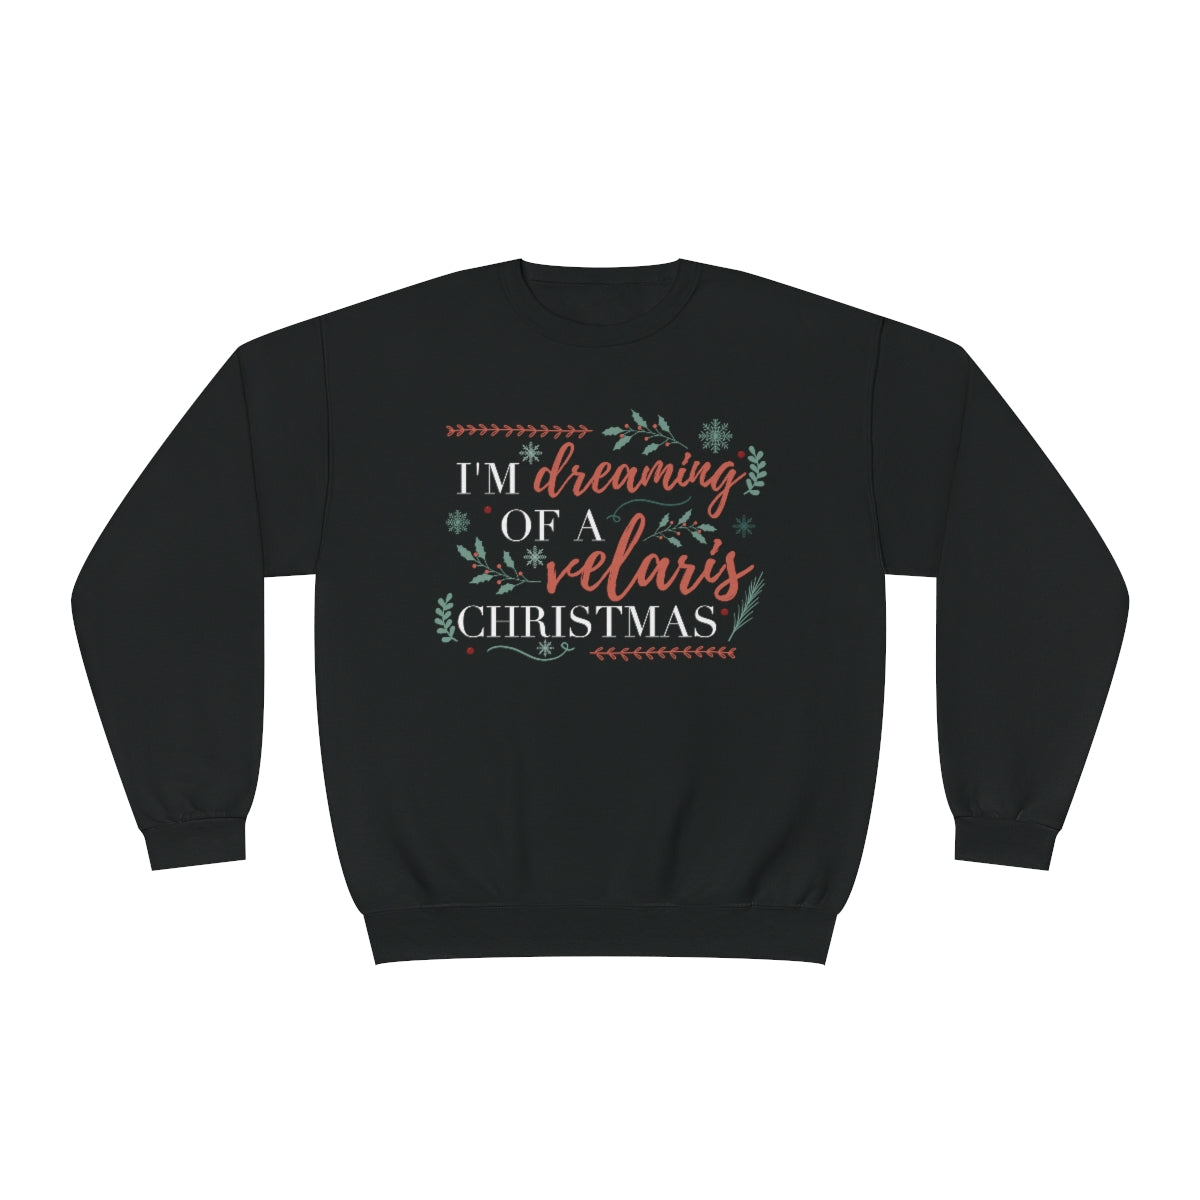 Velaris Christmas Crewneck Sweatshirt